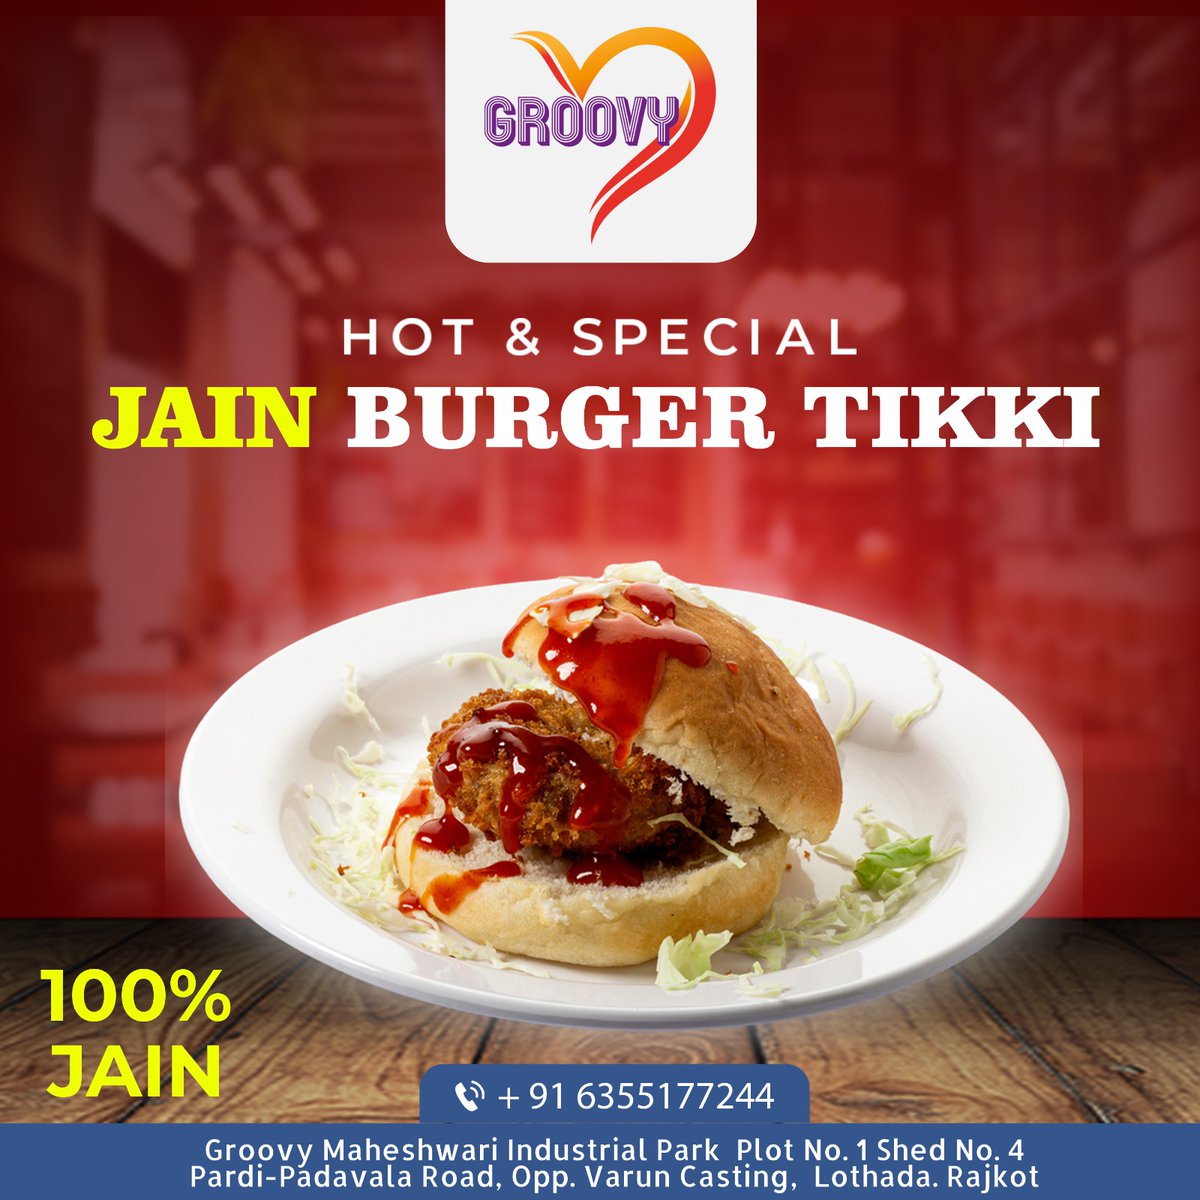 Hot & Special Jain Burger Tikki 
.
.
.
#groovy #GROOVYCAFE #restaurant #pizza #paneerpizza #tandoorichickenpizza #cheesecorn #ItalianCrush #tandoorichicken #chickenpizza #pizzalover #pizzatime #indianpizza #italianfood #tastyfood #indianrestaurant #pizzatreat #weekend #spicyfood